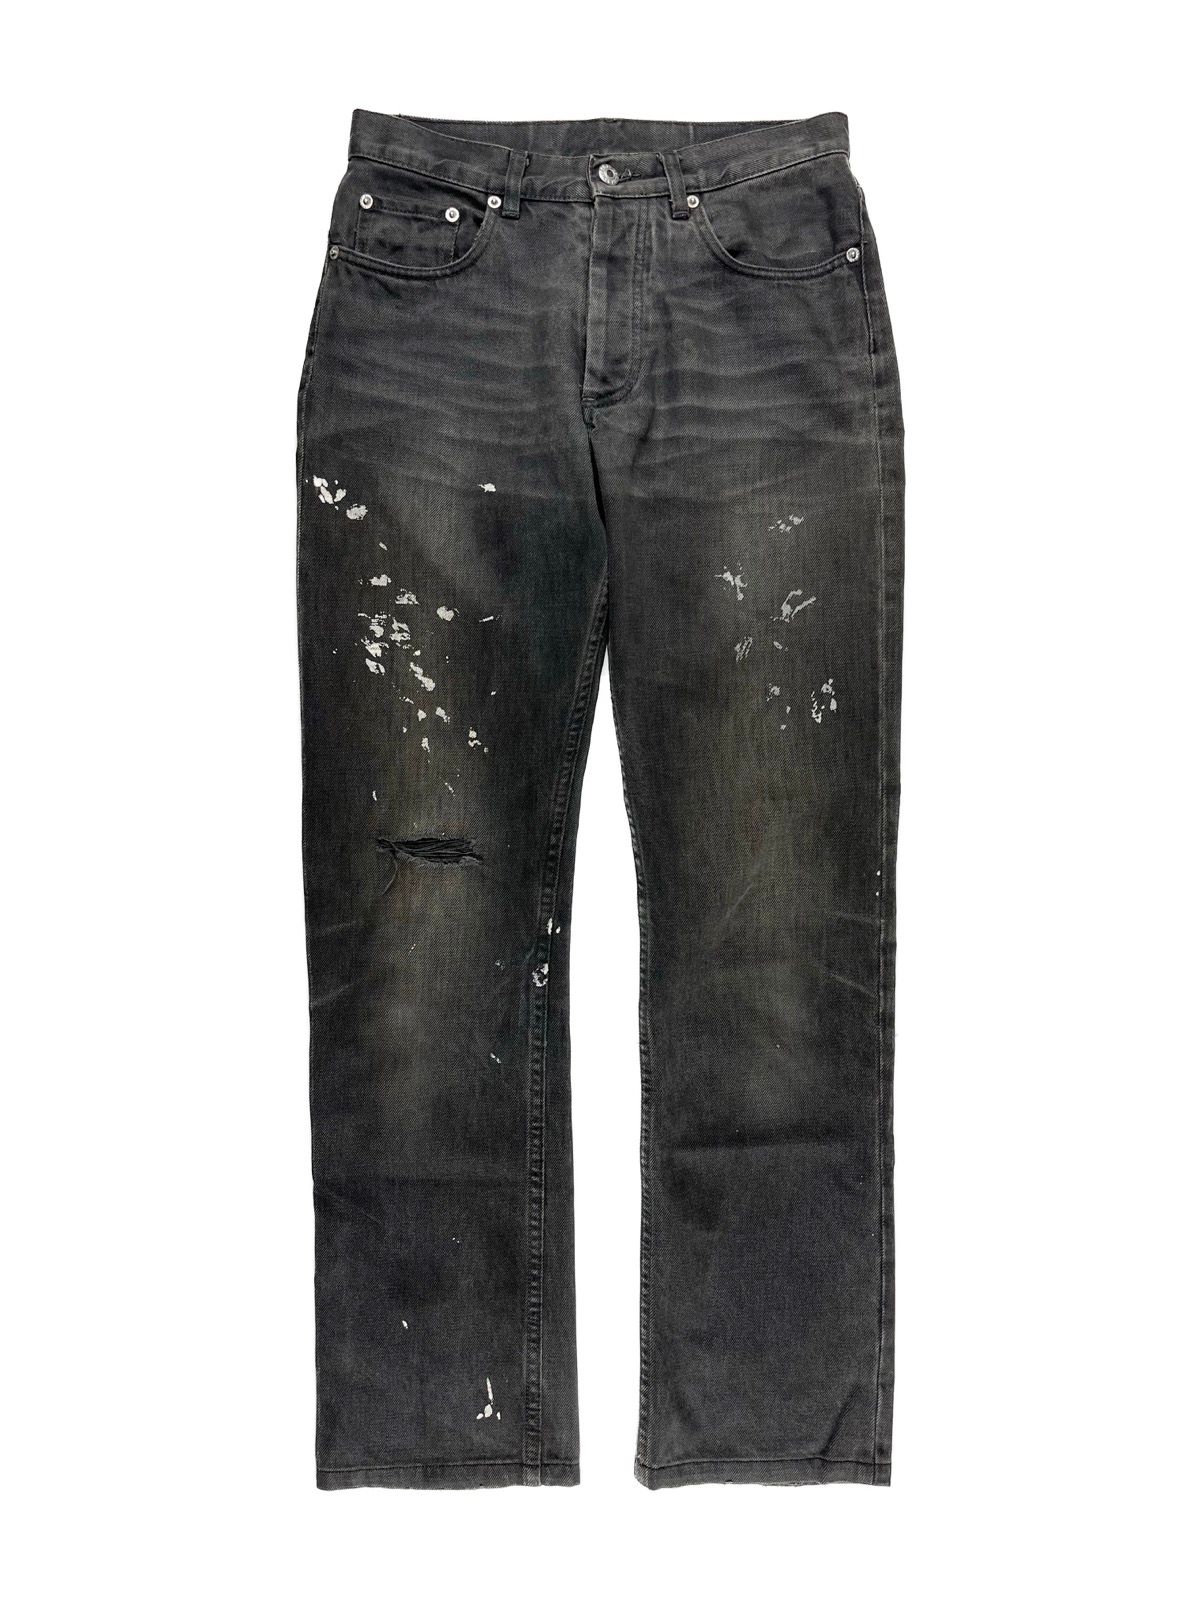 Vintage AW00 Helmut Lang Charcoal Bootcut Painter Denim Jeans Size US 27 - 1 Preview